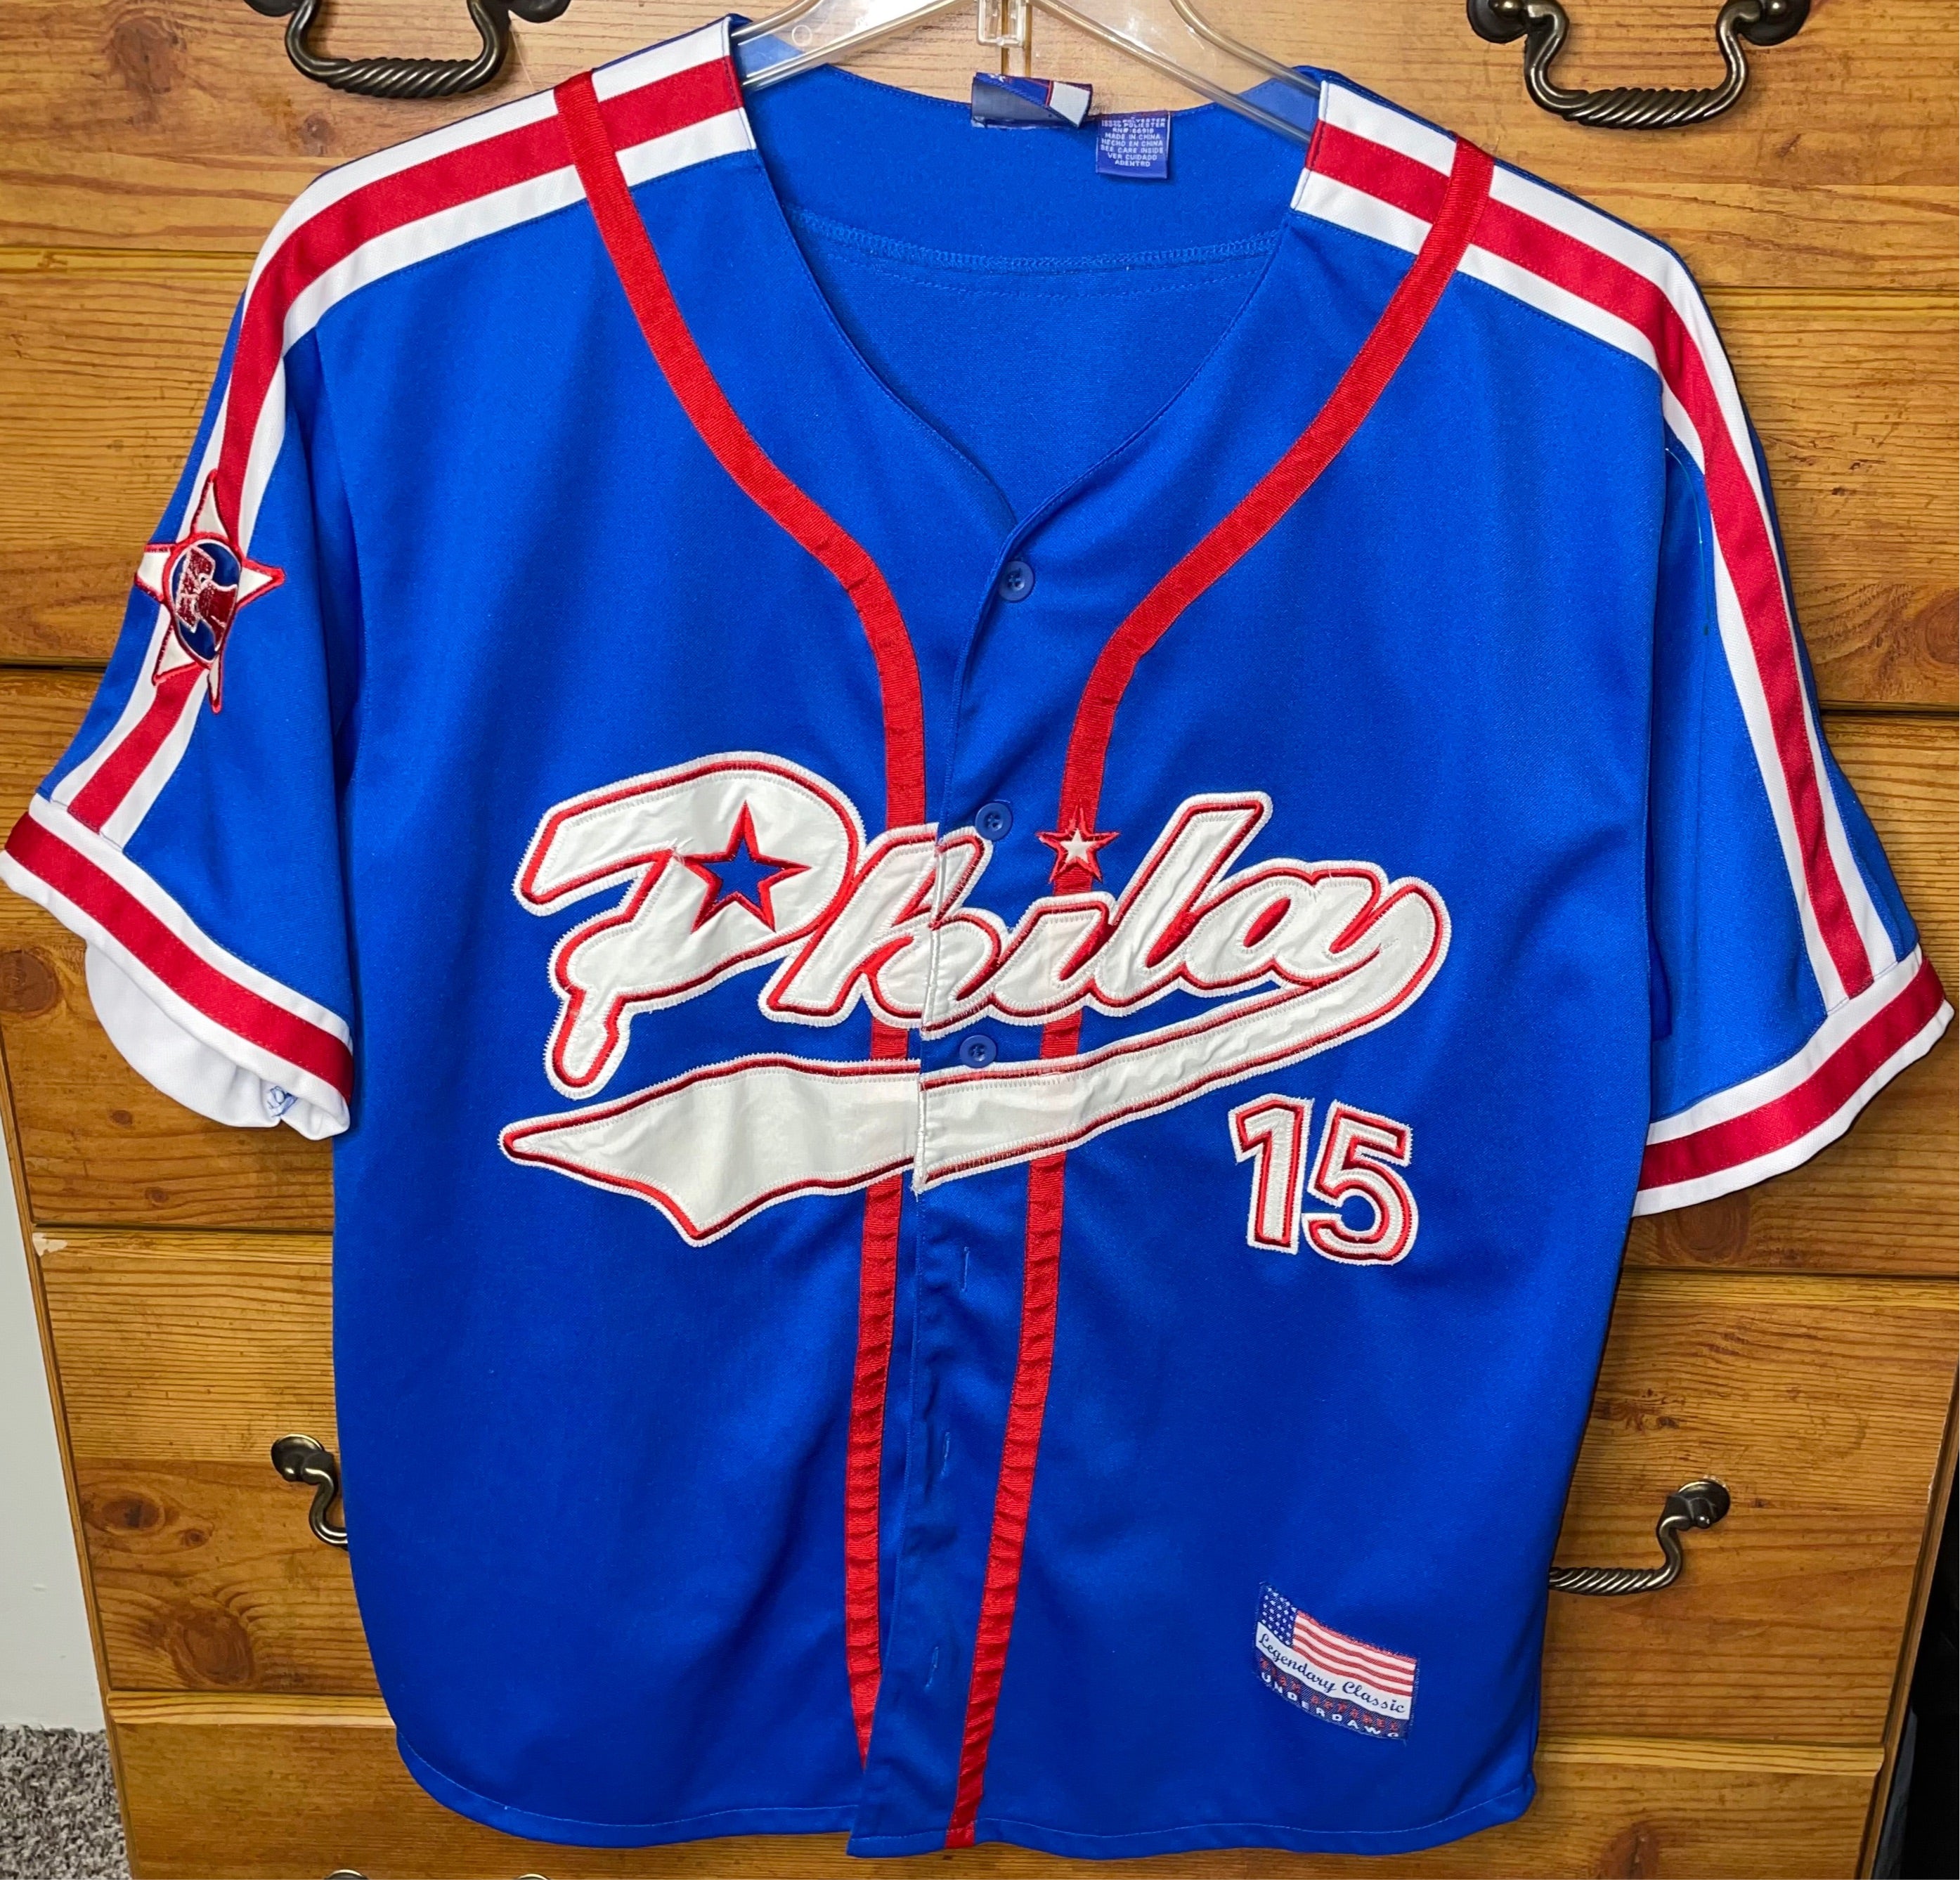 Legendary classic Phillies jersey